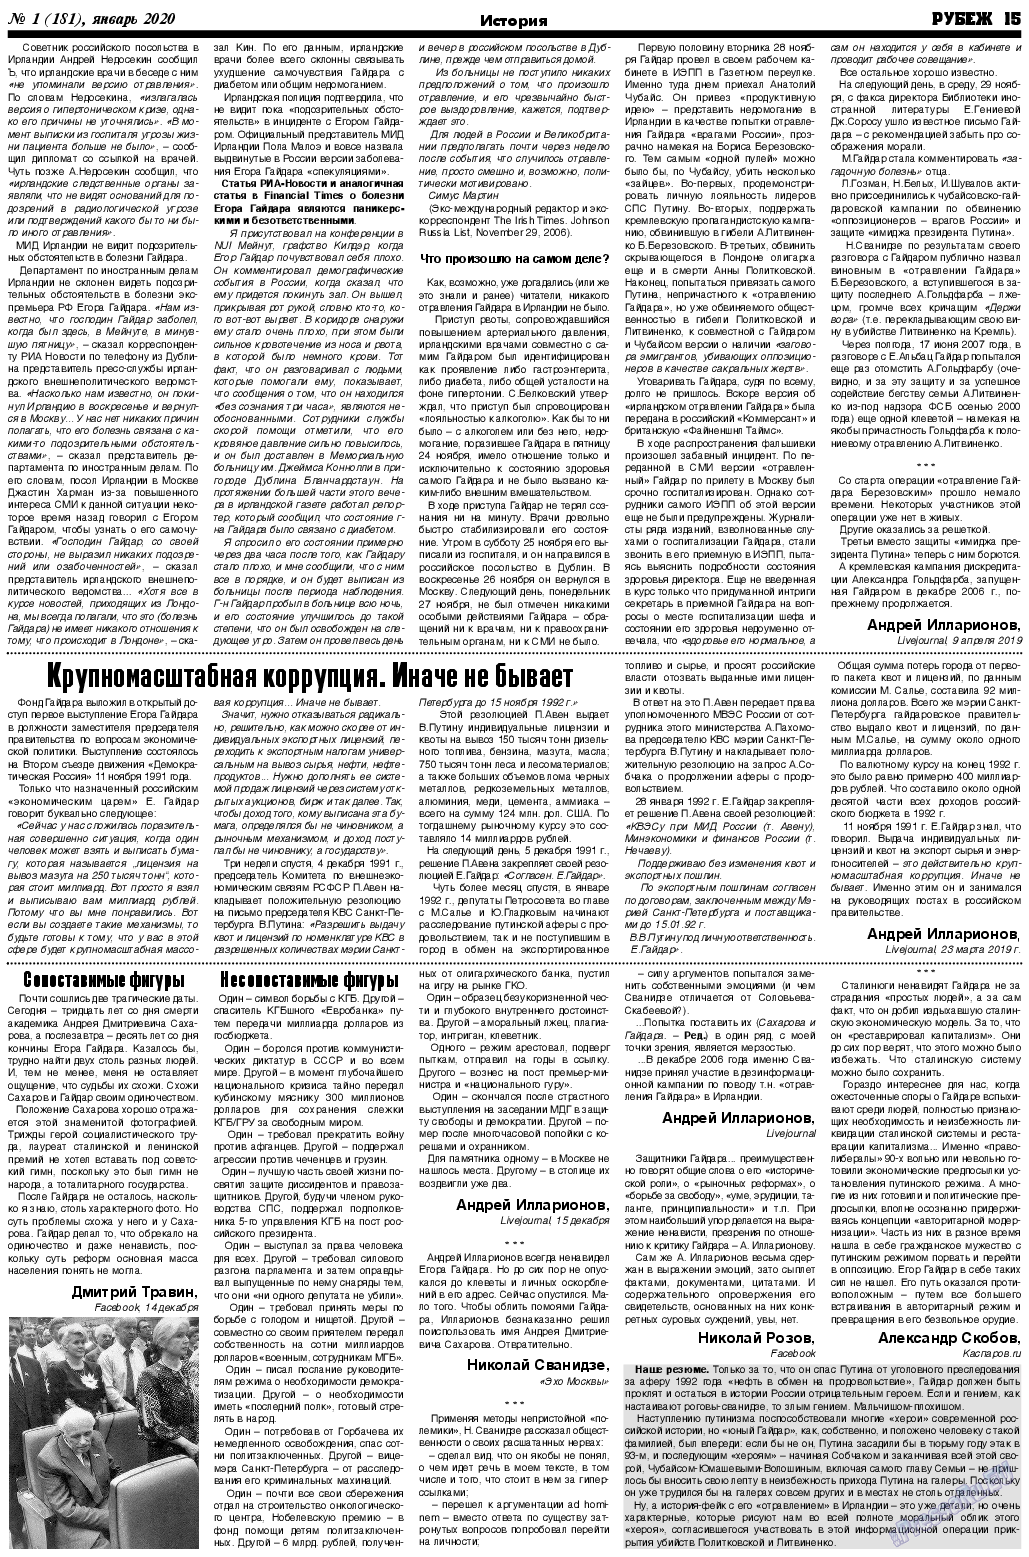 Рубеж, газета. 2020 №1 стр.15